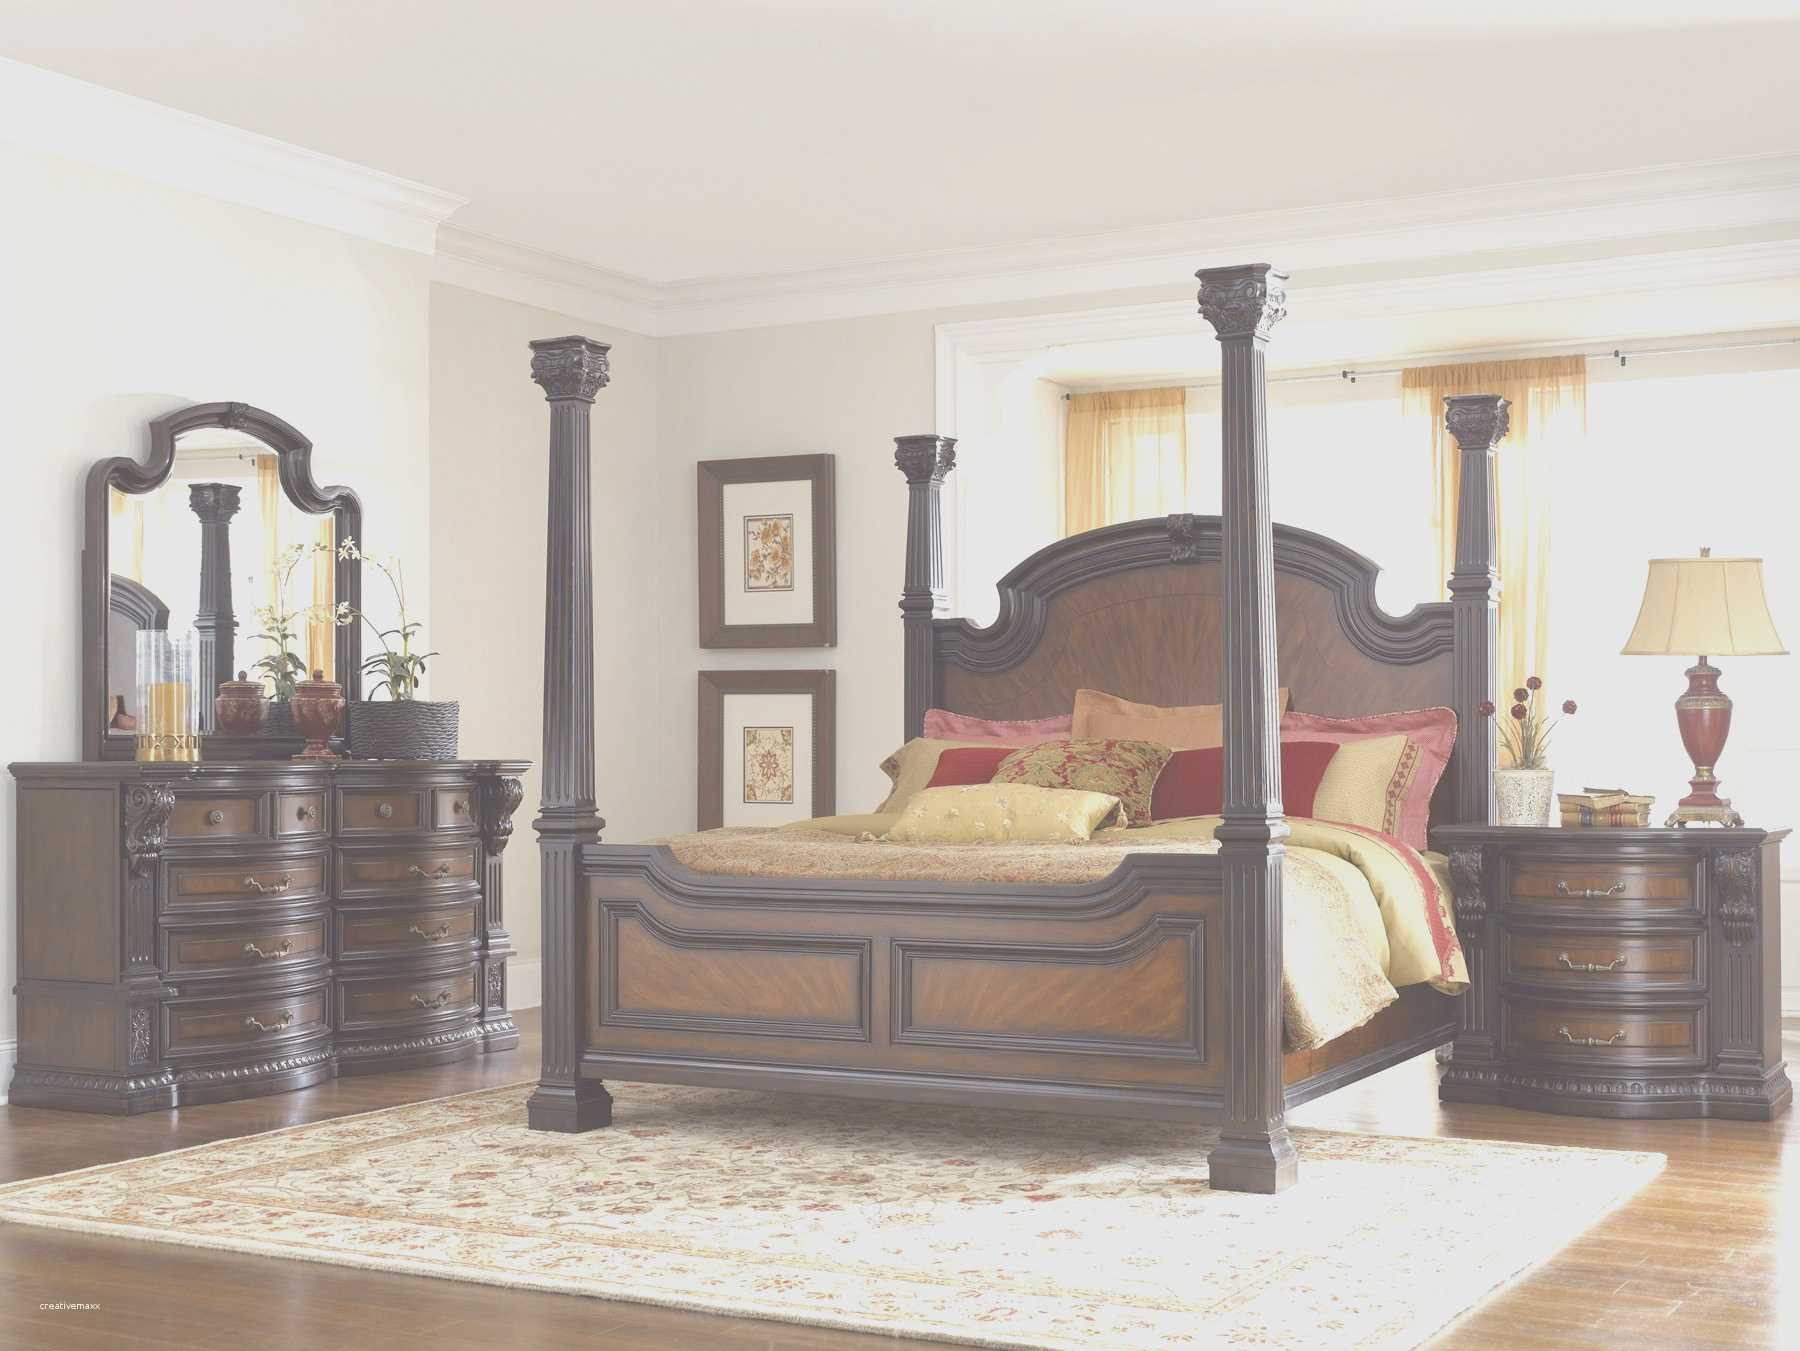 King Size Master Bedroom Sets
 Luxury master bedroom sets new bedroom king size master